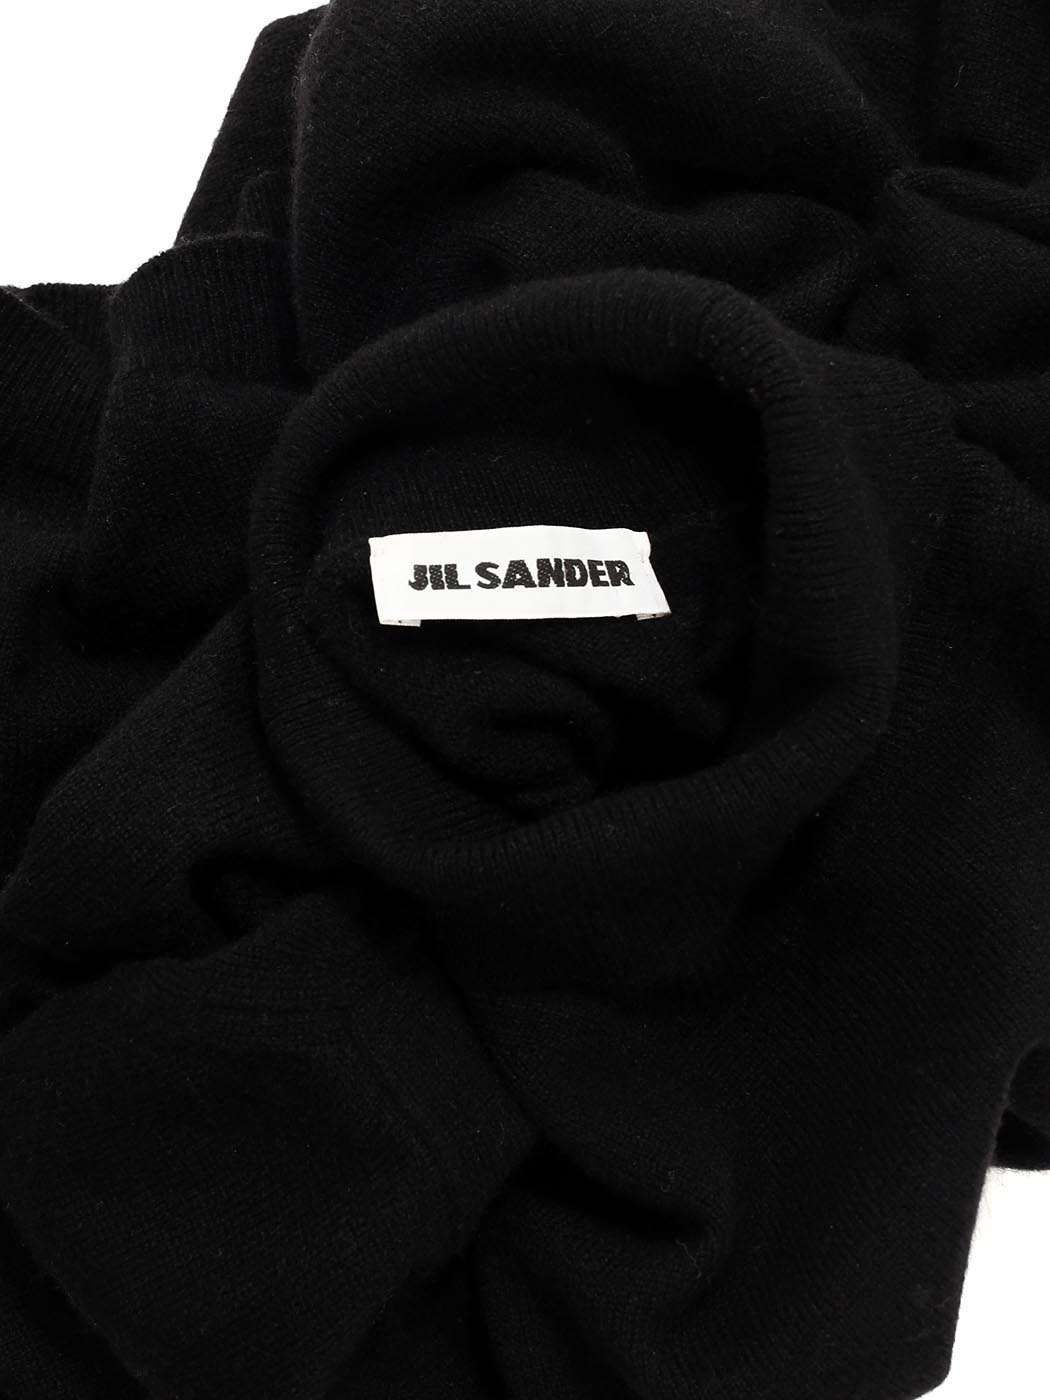 Jil Sander Wool Turtleneck in Black for Men Mens Clothing Sweaters and knitwear Turtlenecks 